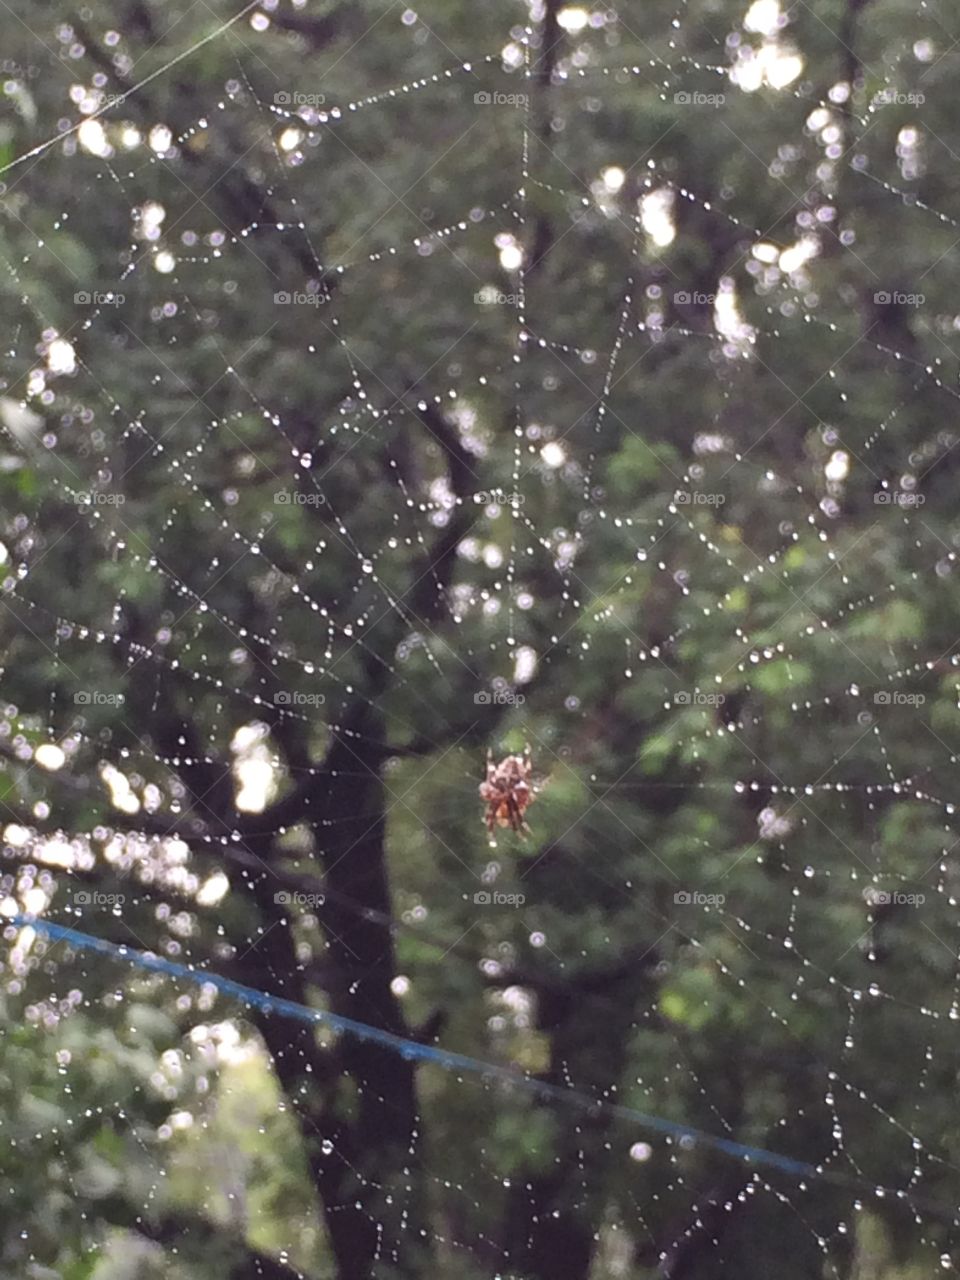 Spider in her web. The rain drops make it look like she's got little gems!